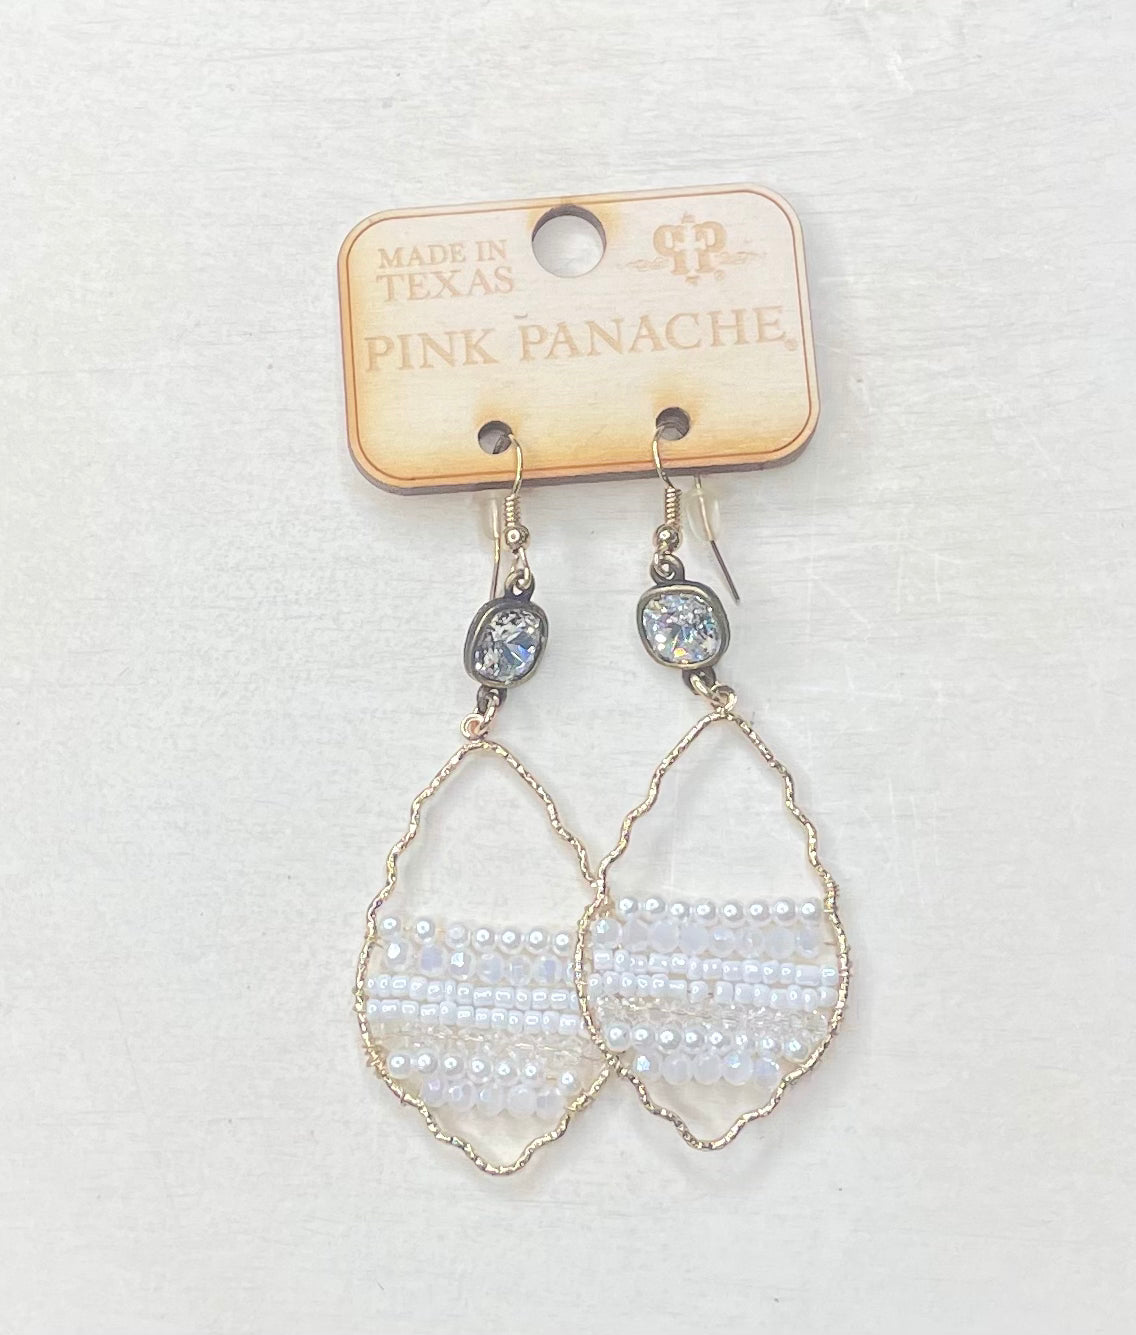 Pink Panache Earrings - 1CNC F121